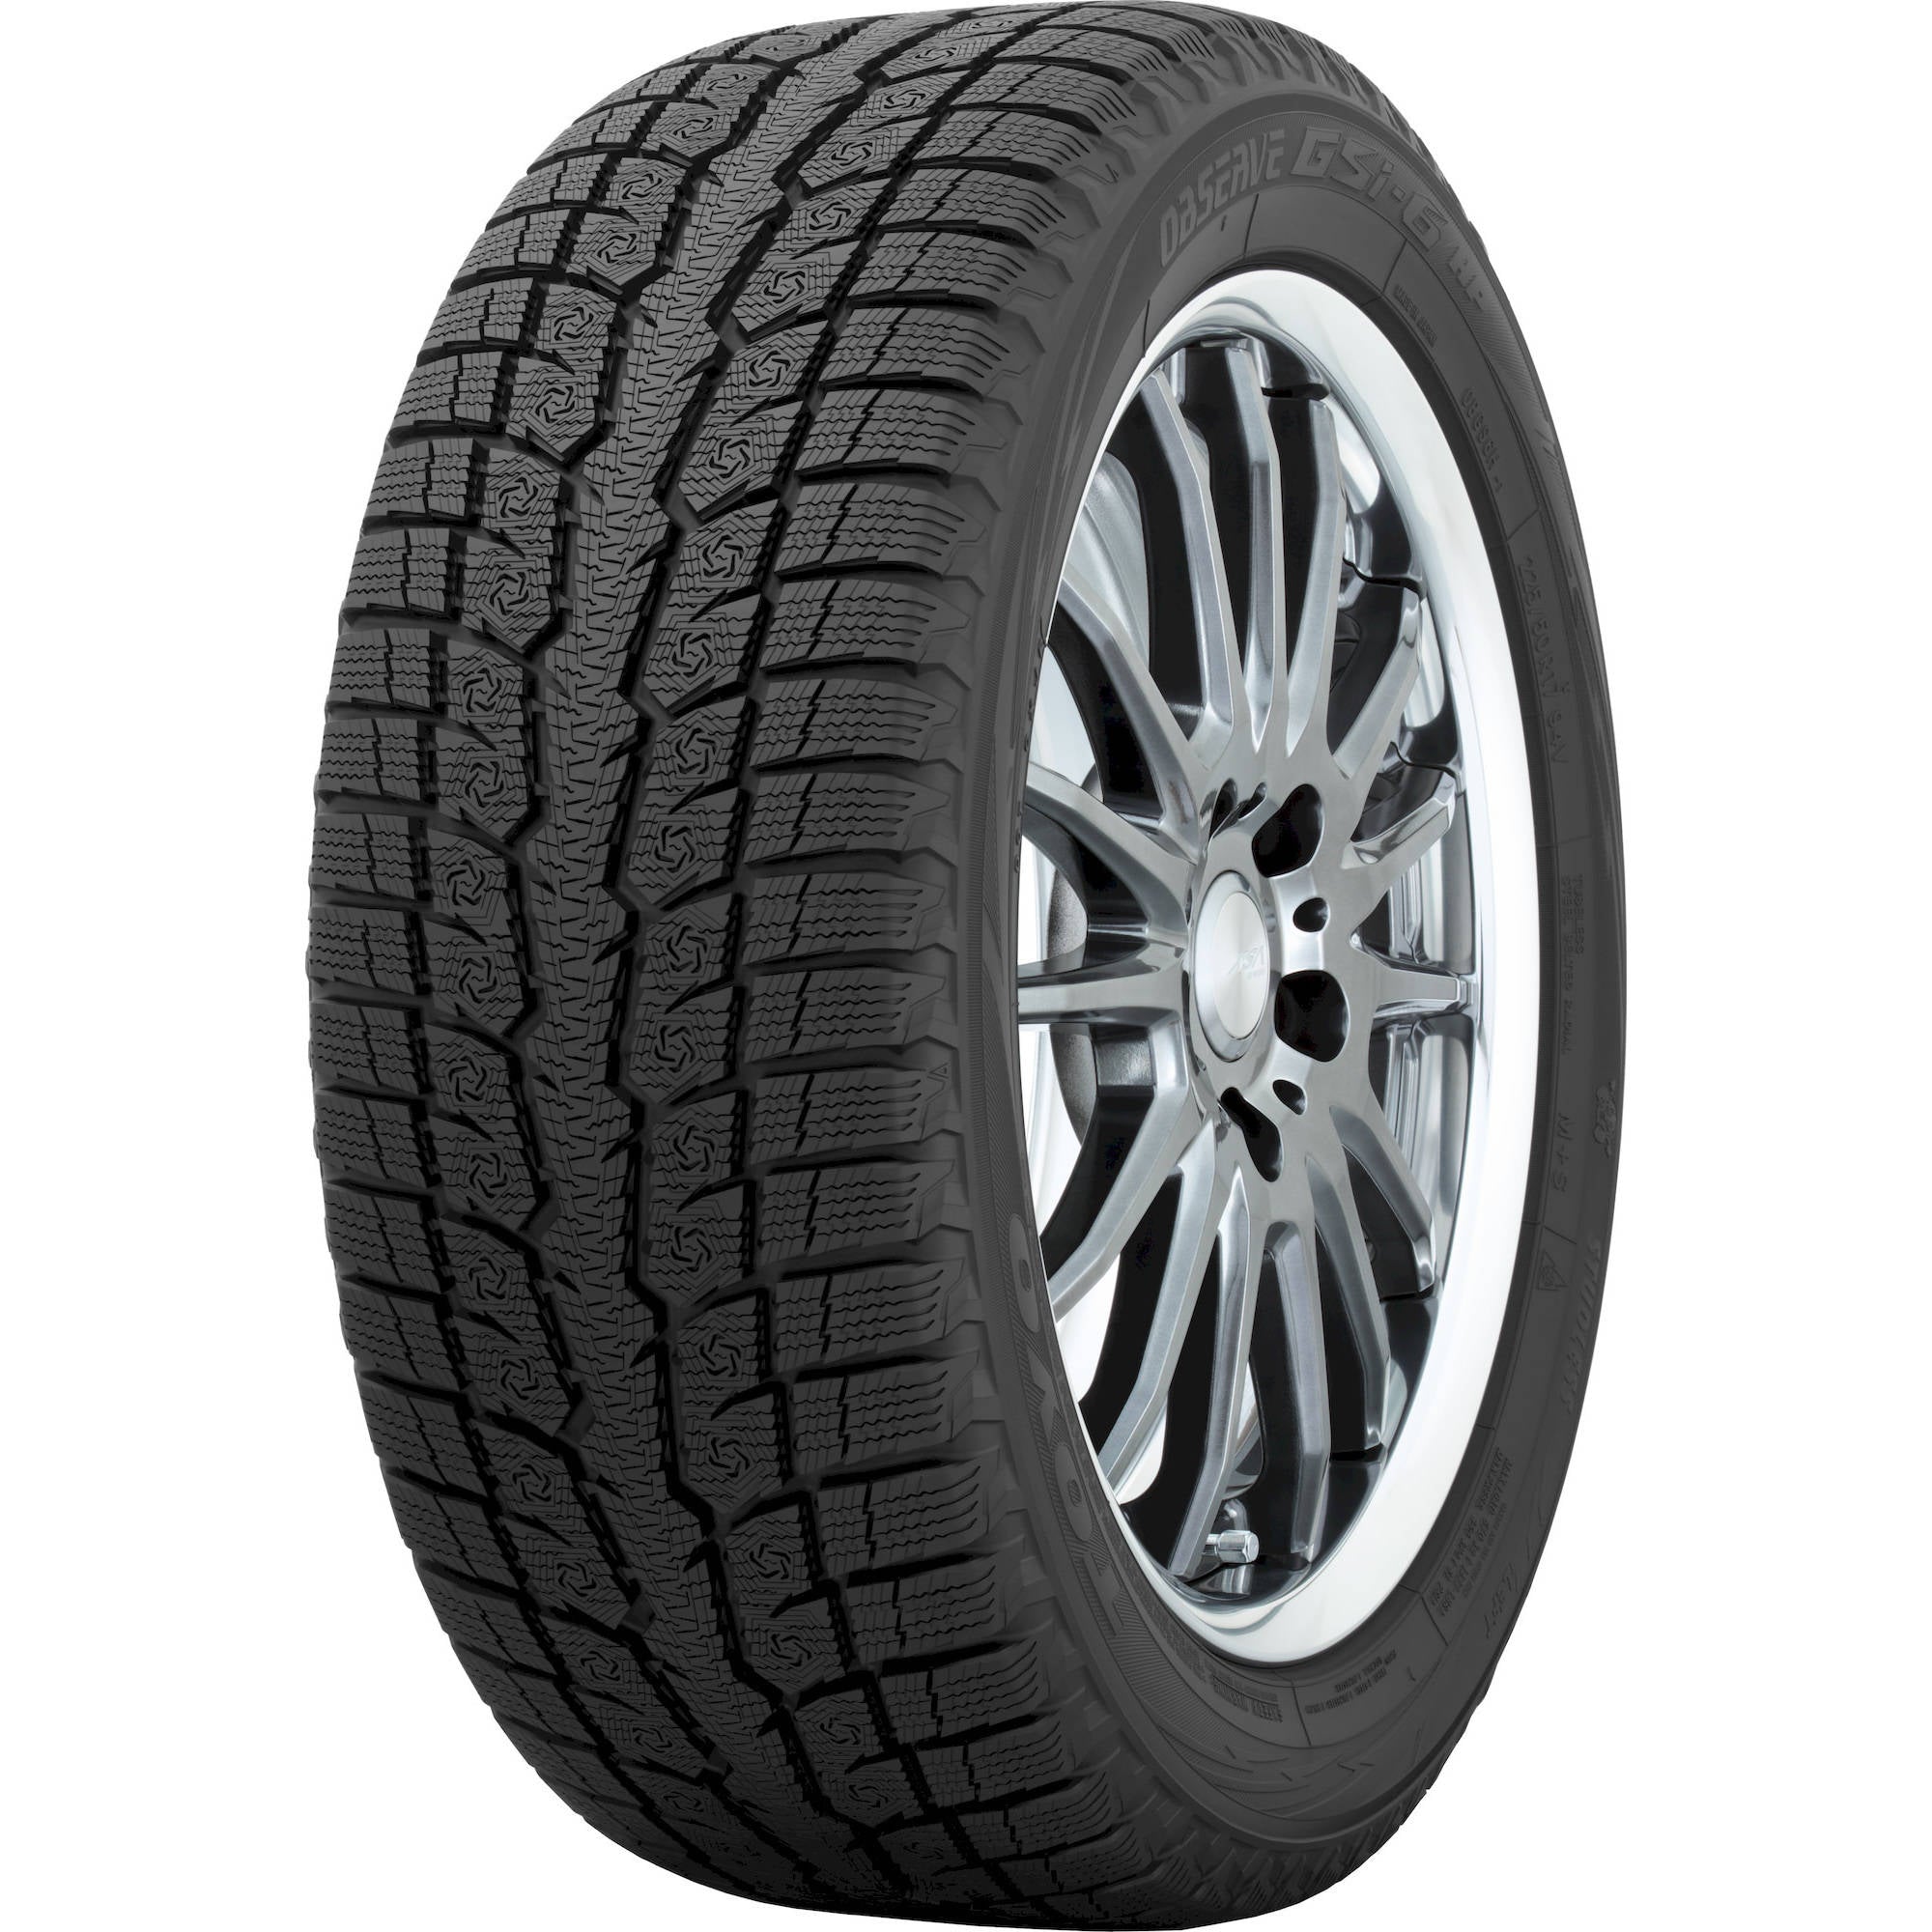 TOYO TIRES OBSERVE GSI-6 215/50R17XL (25.5X8.5R 17) Tires